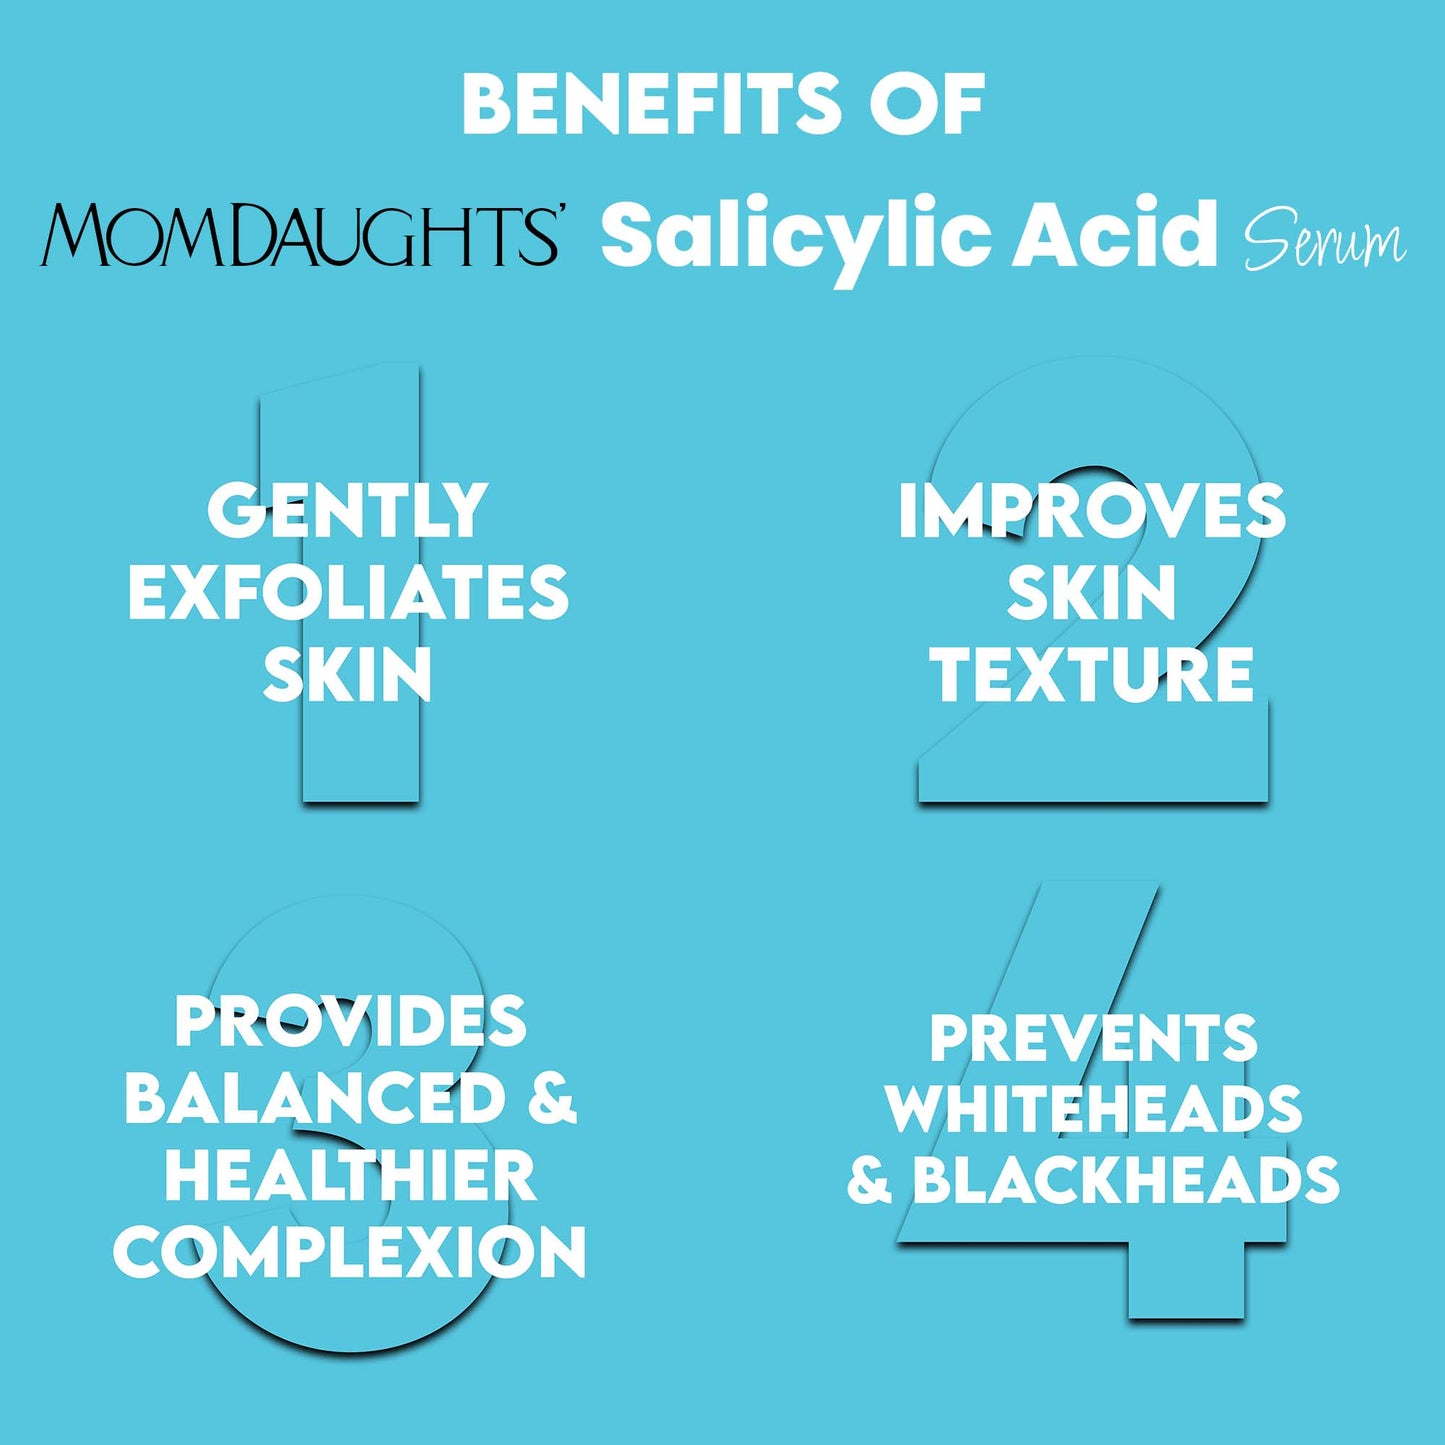 Benefits of Salicylic Acid Serum